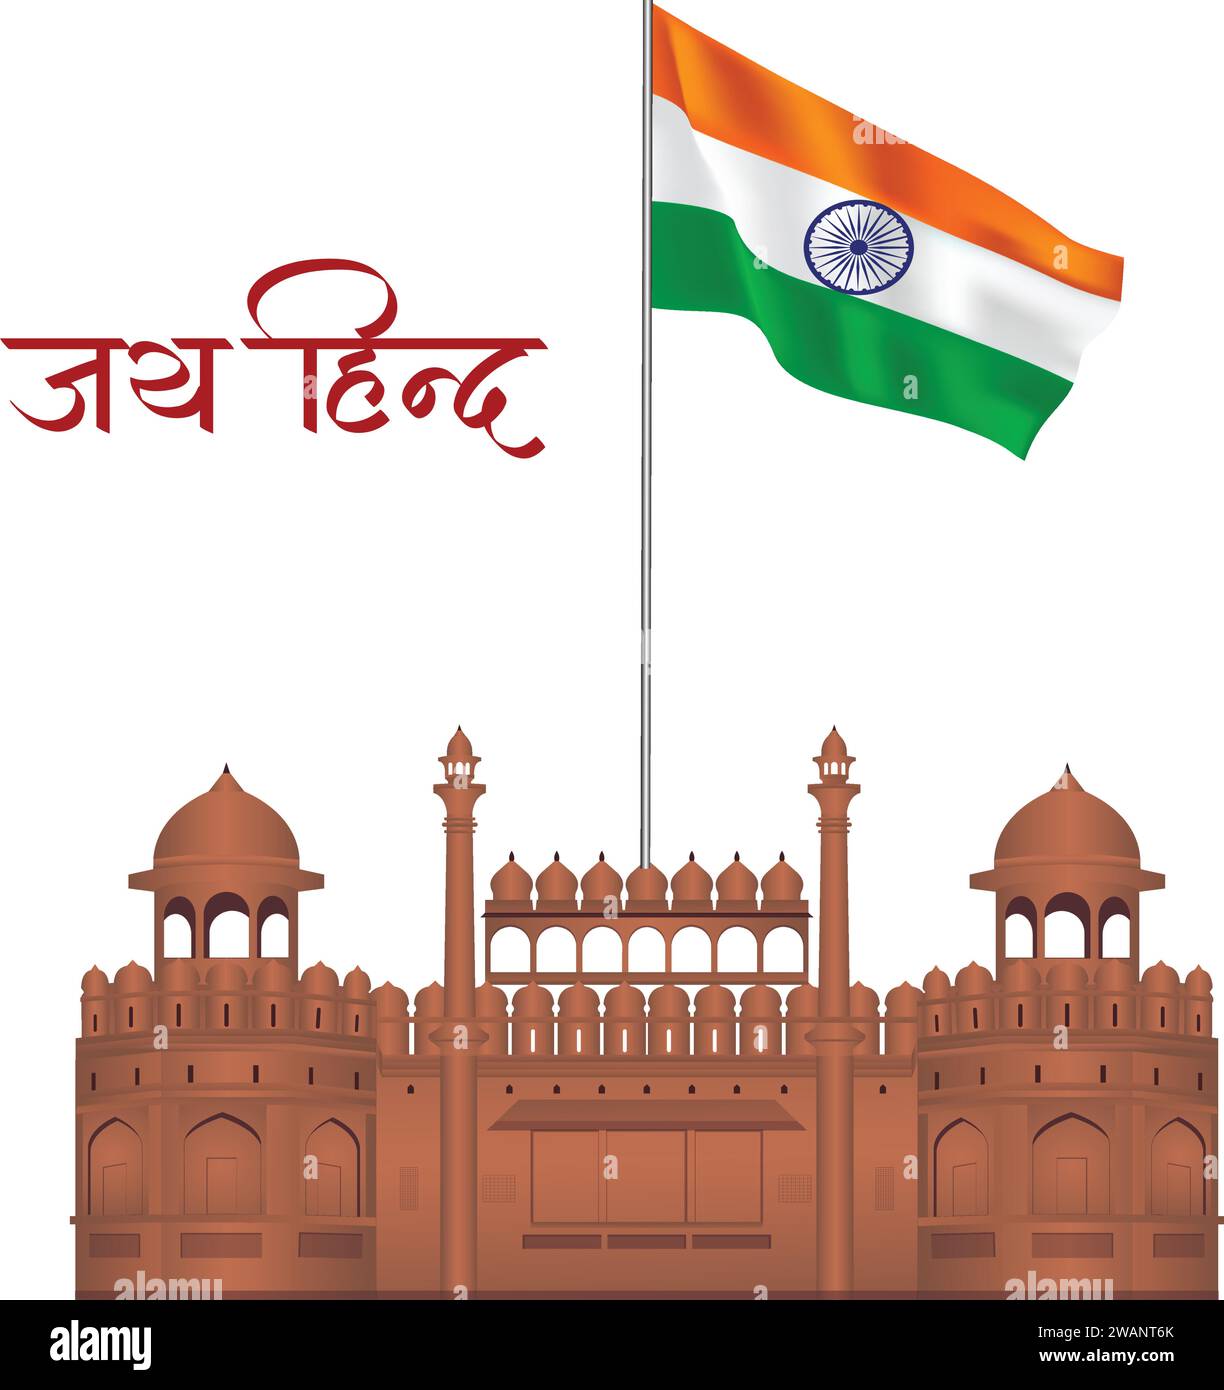 Indische Flagge auf roter Festung Vektor Illustration Stock Vektor